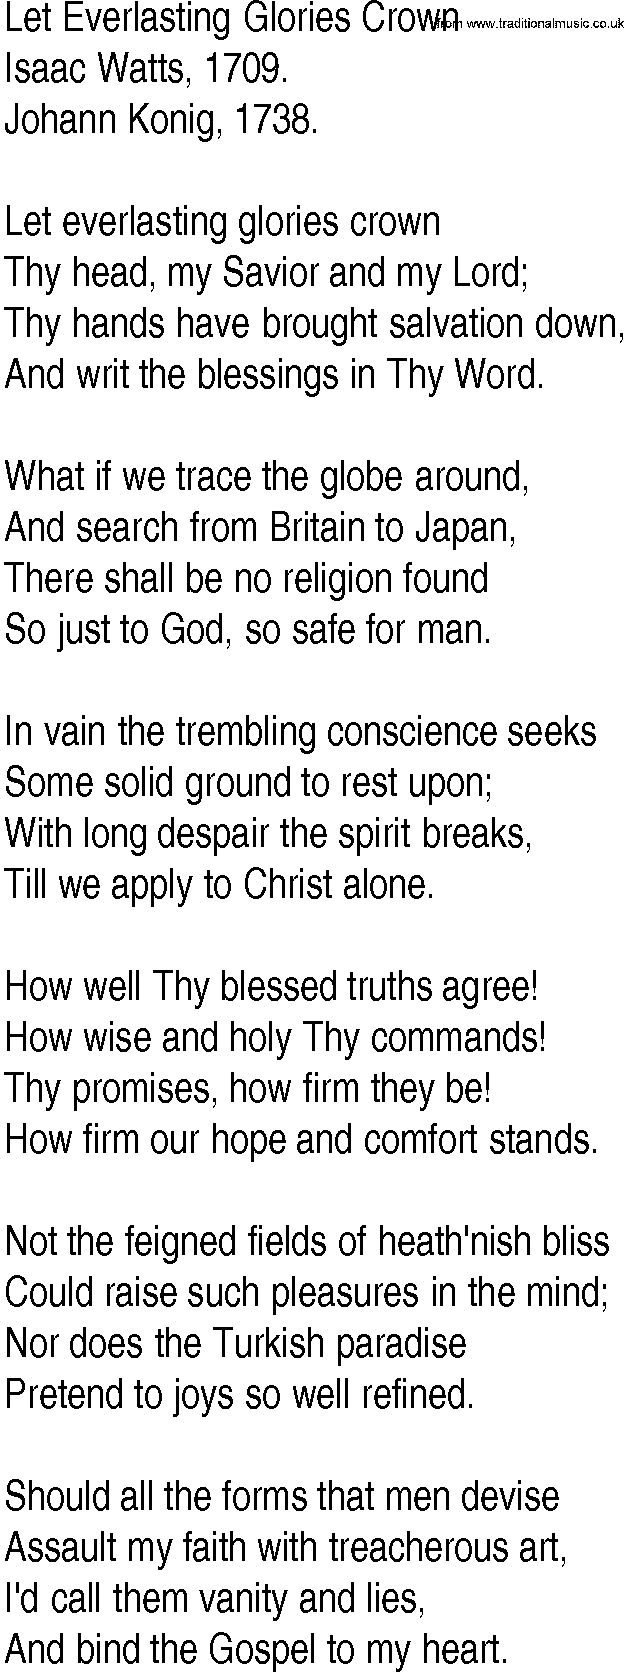 Hymn and Gospel Song: Let Everlasting Glories Crown by Isaac Watts lyrics